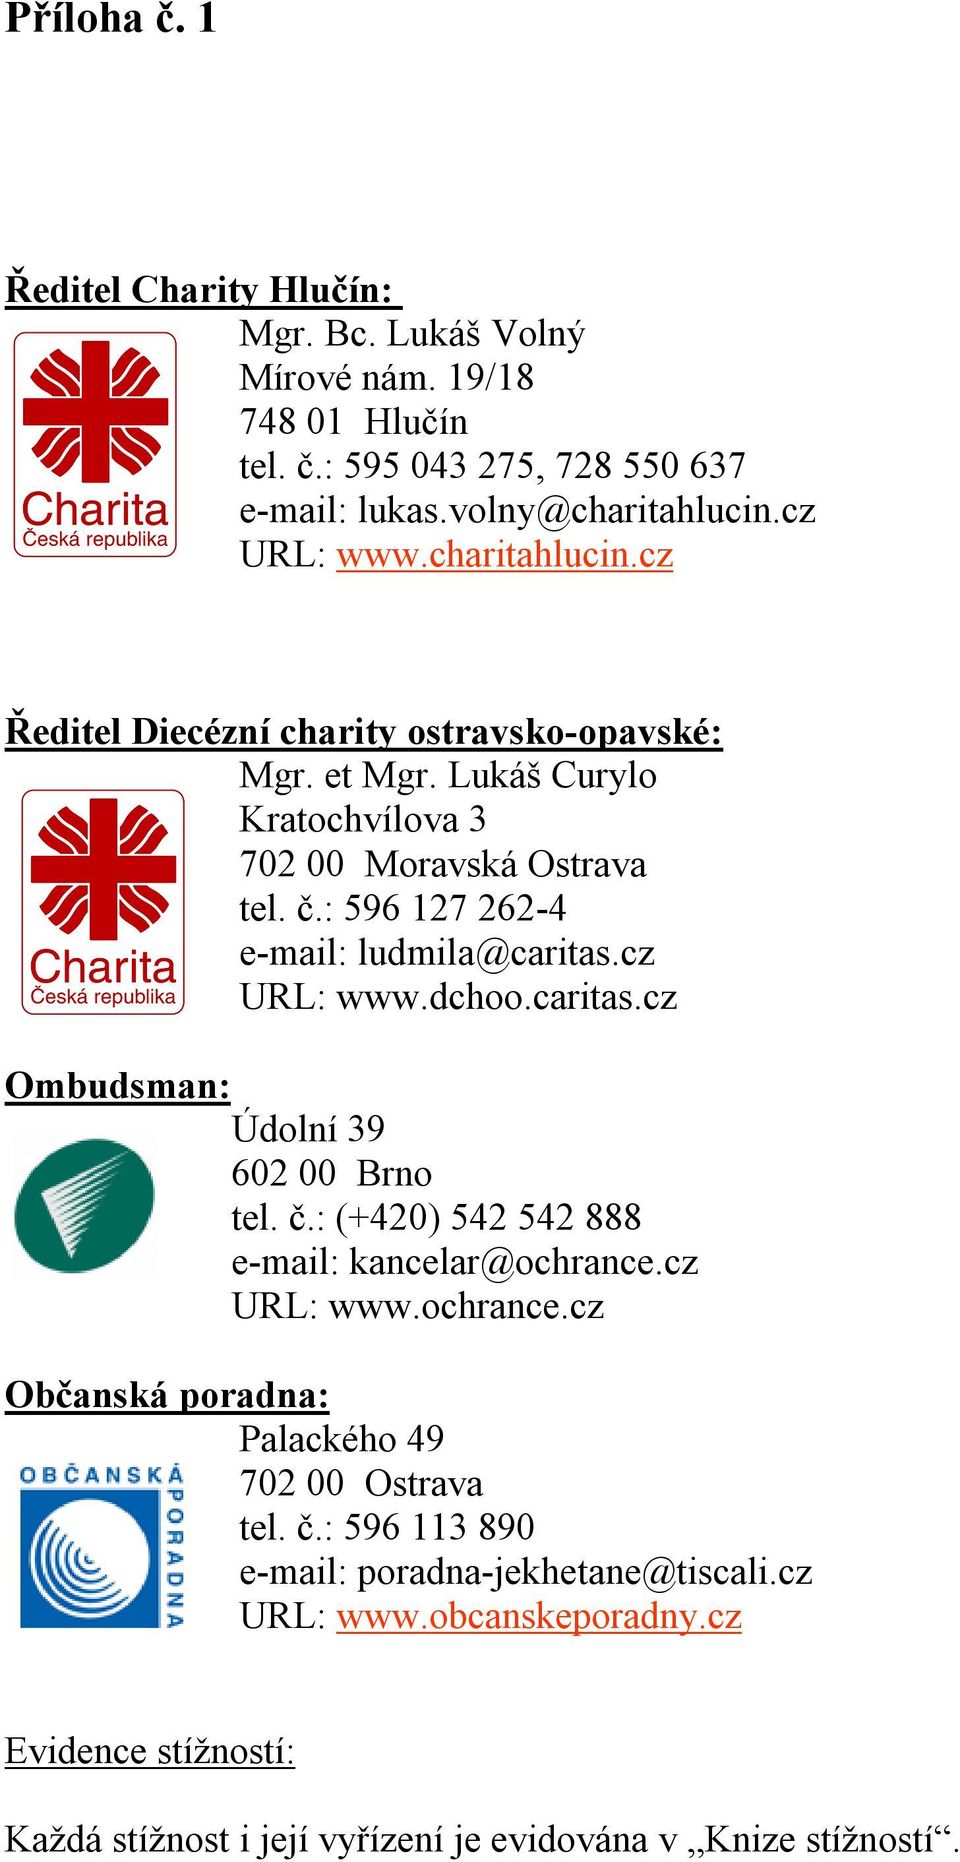 : 596 127 262-4 e-mail: ludmila@caritas.cz URL: www.dchoo.caritas.cz Ombudsman: Údolní 39 602 00 Brno tel. č.: (+420) 542 542 888 e-mail: kancelar@ochrance.